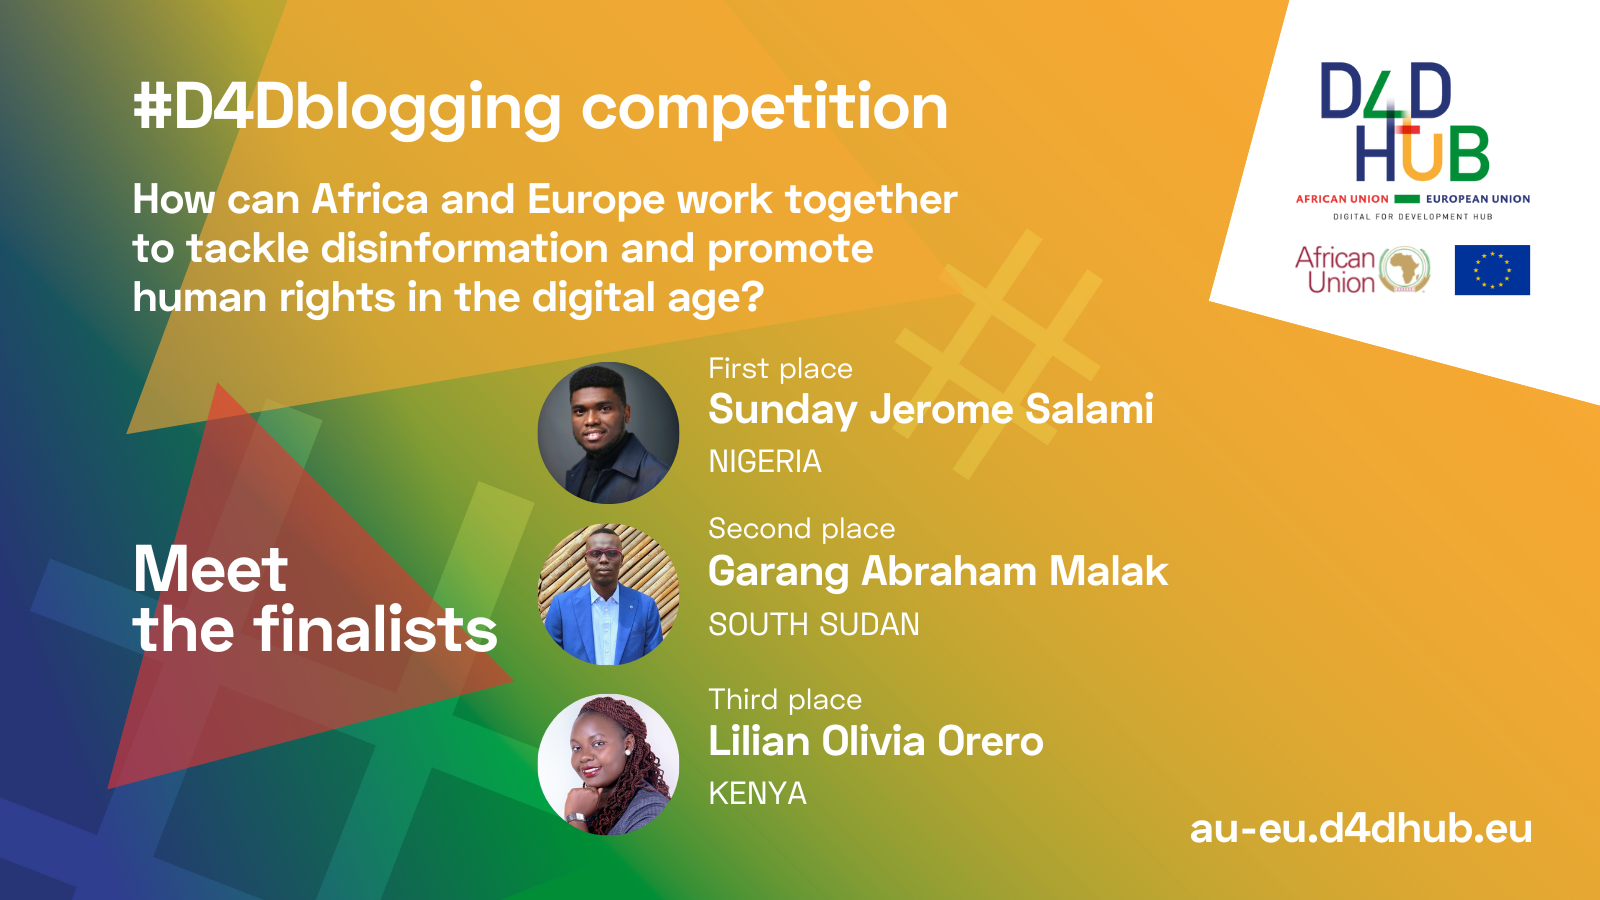 Nigerian blogger Sunday Jerome Salami wins #D4Dblogging competition on disinformation